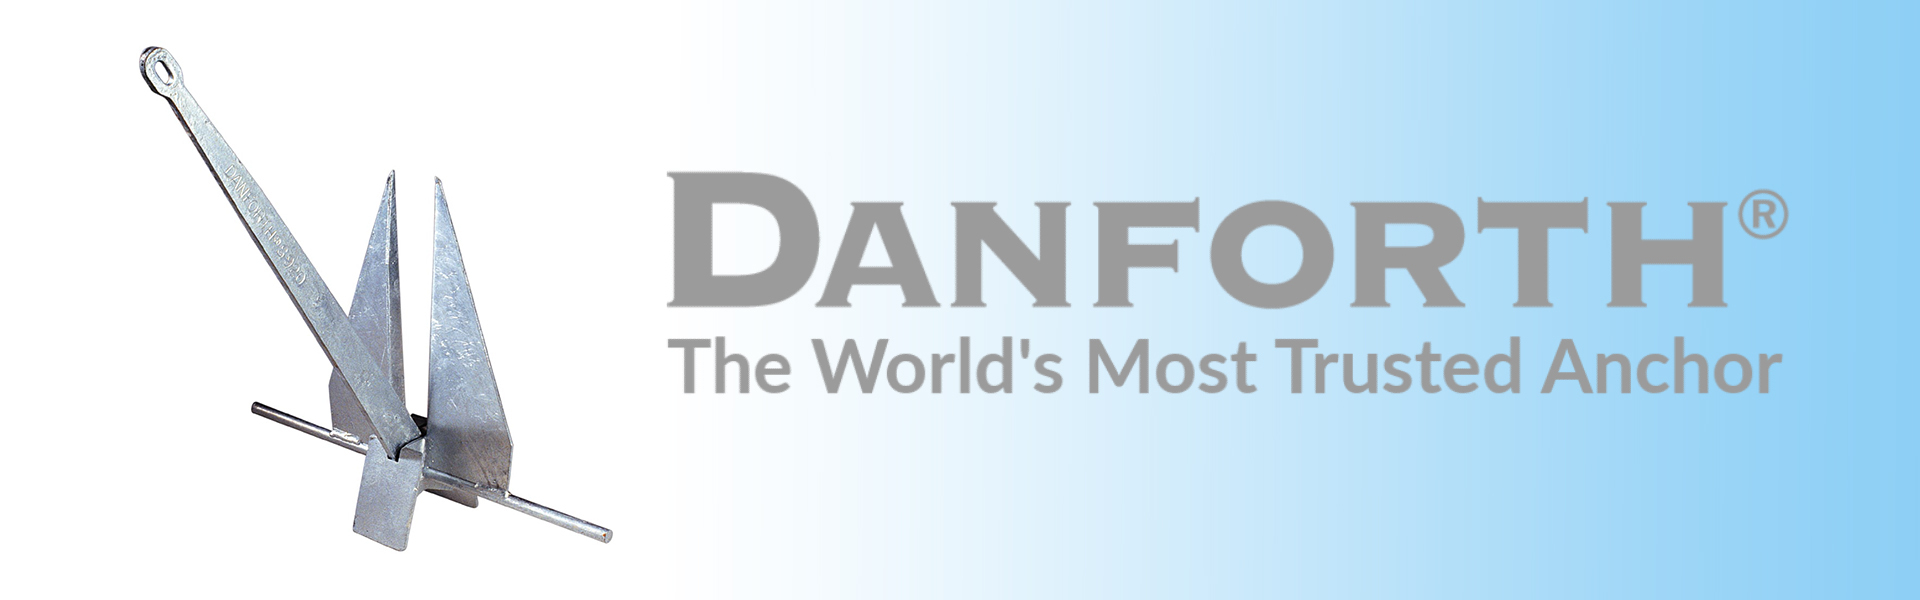 danforth-brand-page-banner.jpg